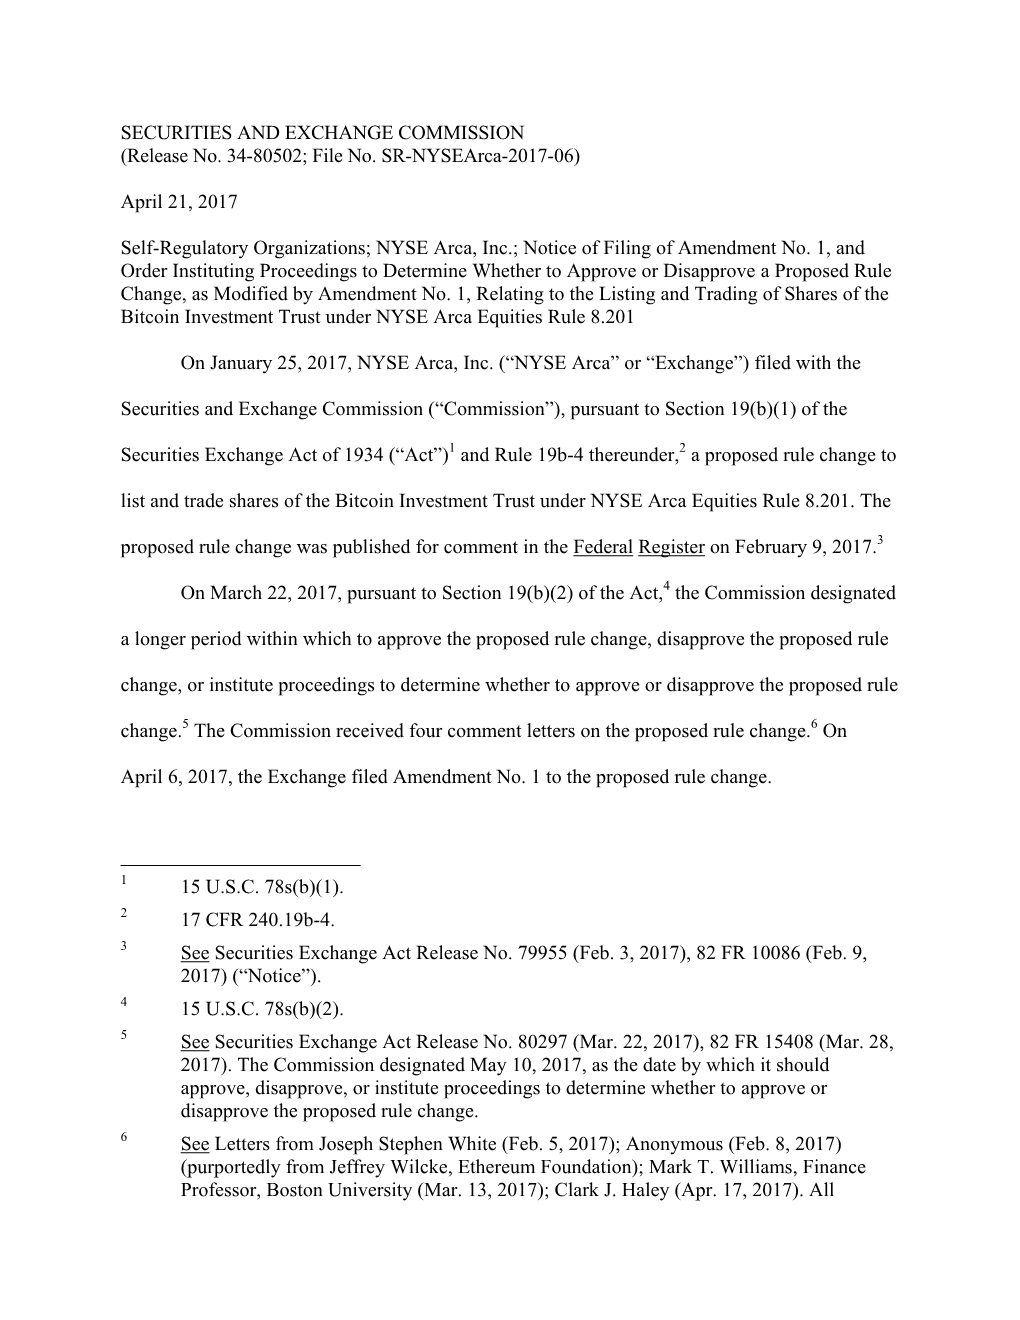 NYSE Arca, Inc.; Notice of Filing of Amendment No